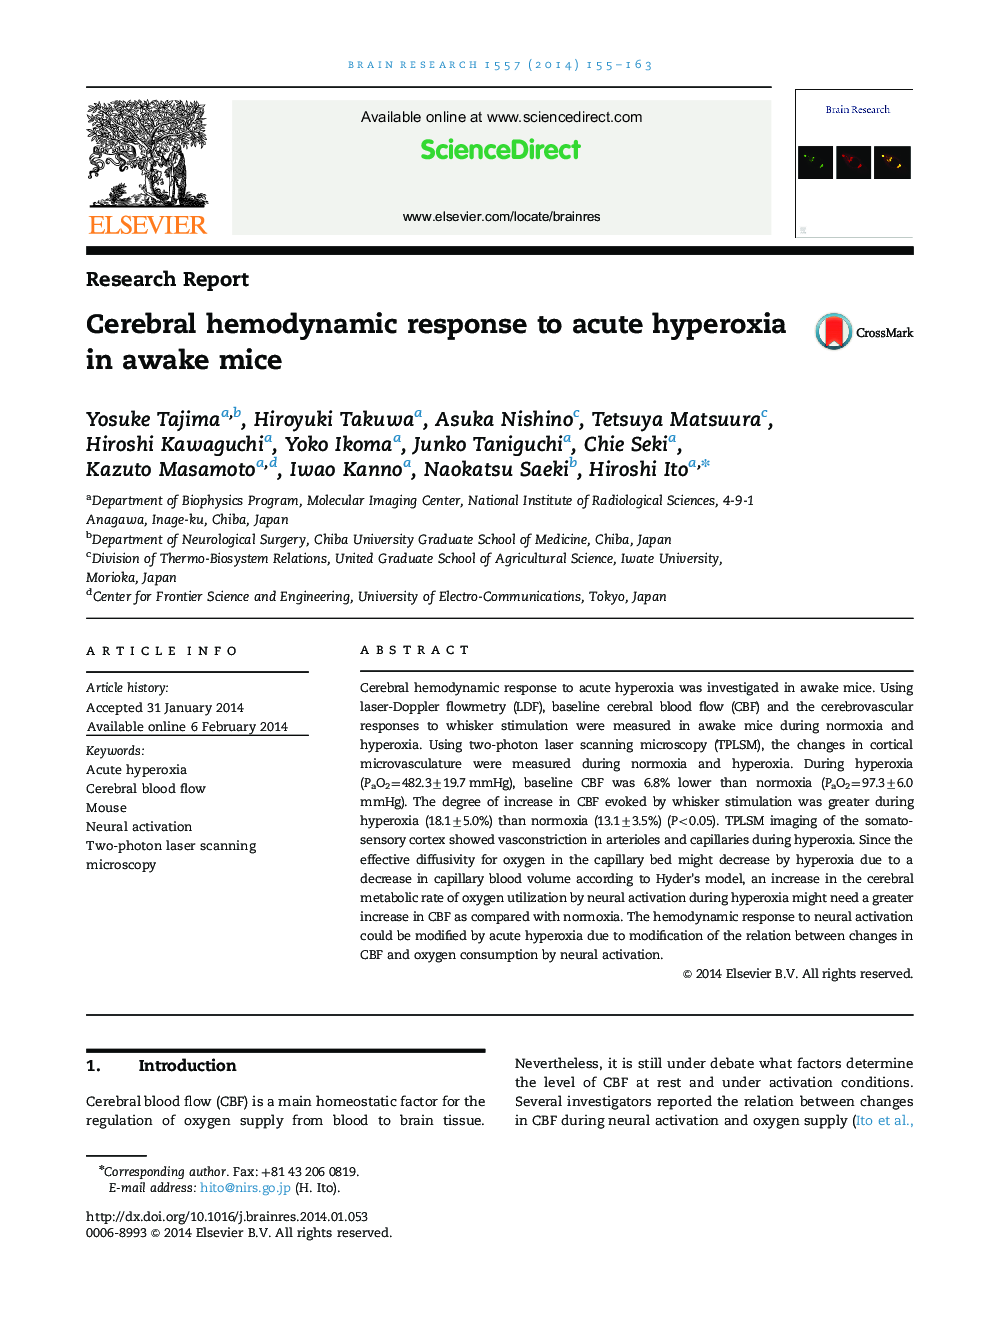 Research ReportCerebral hemodynamic response to acute hyperoxia in awake mice